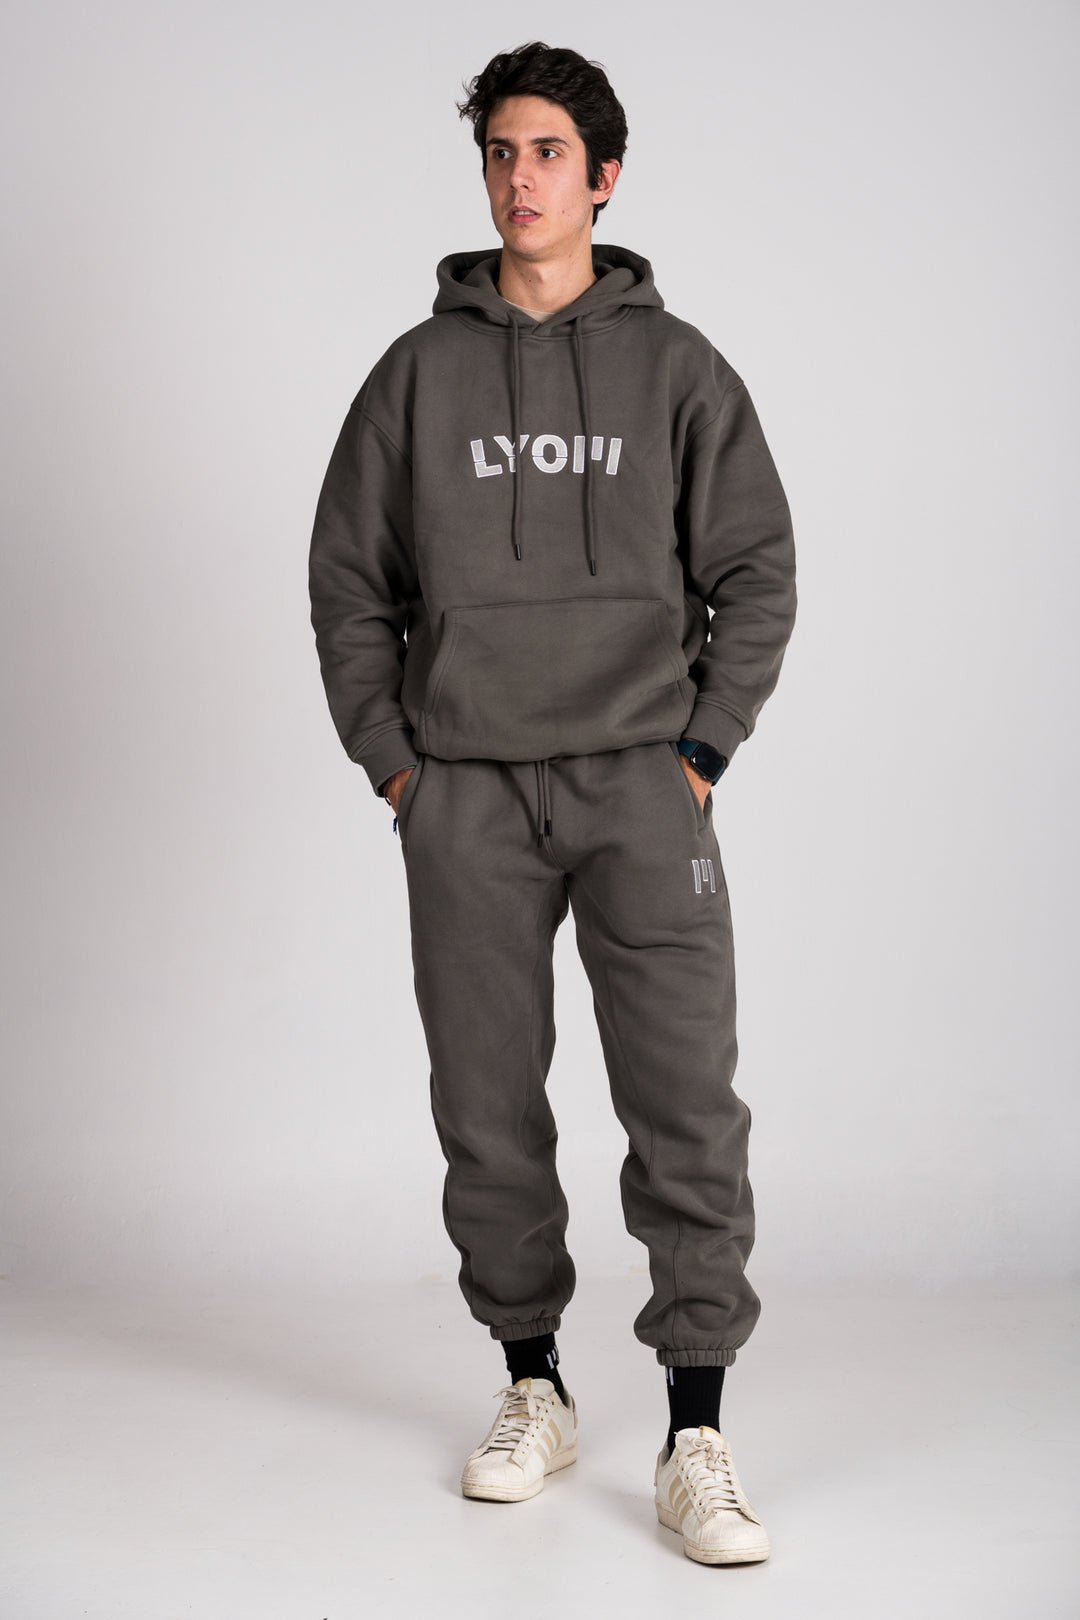 LYOM™ Dynamic Hoodie - Dark Grey